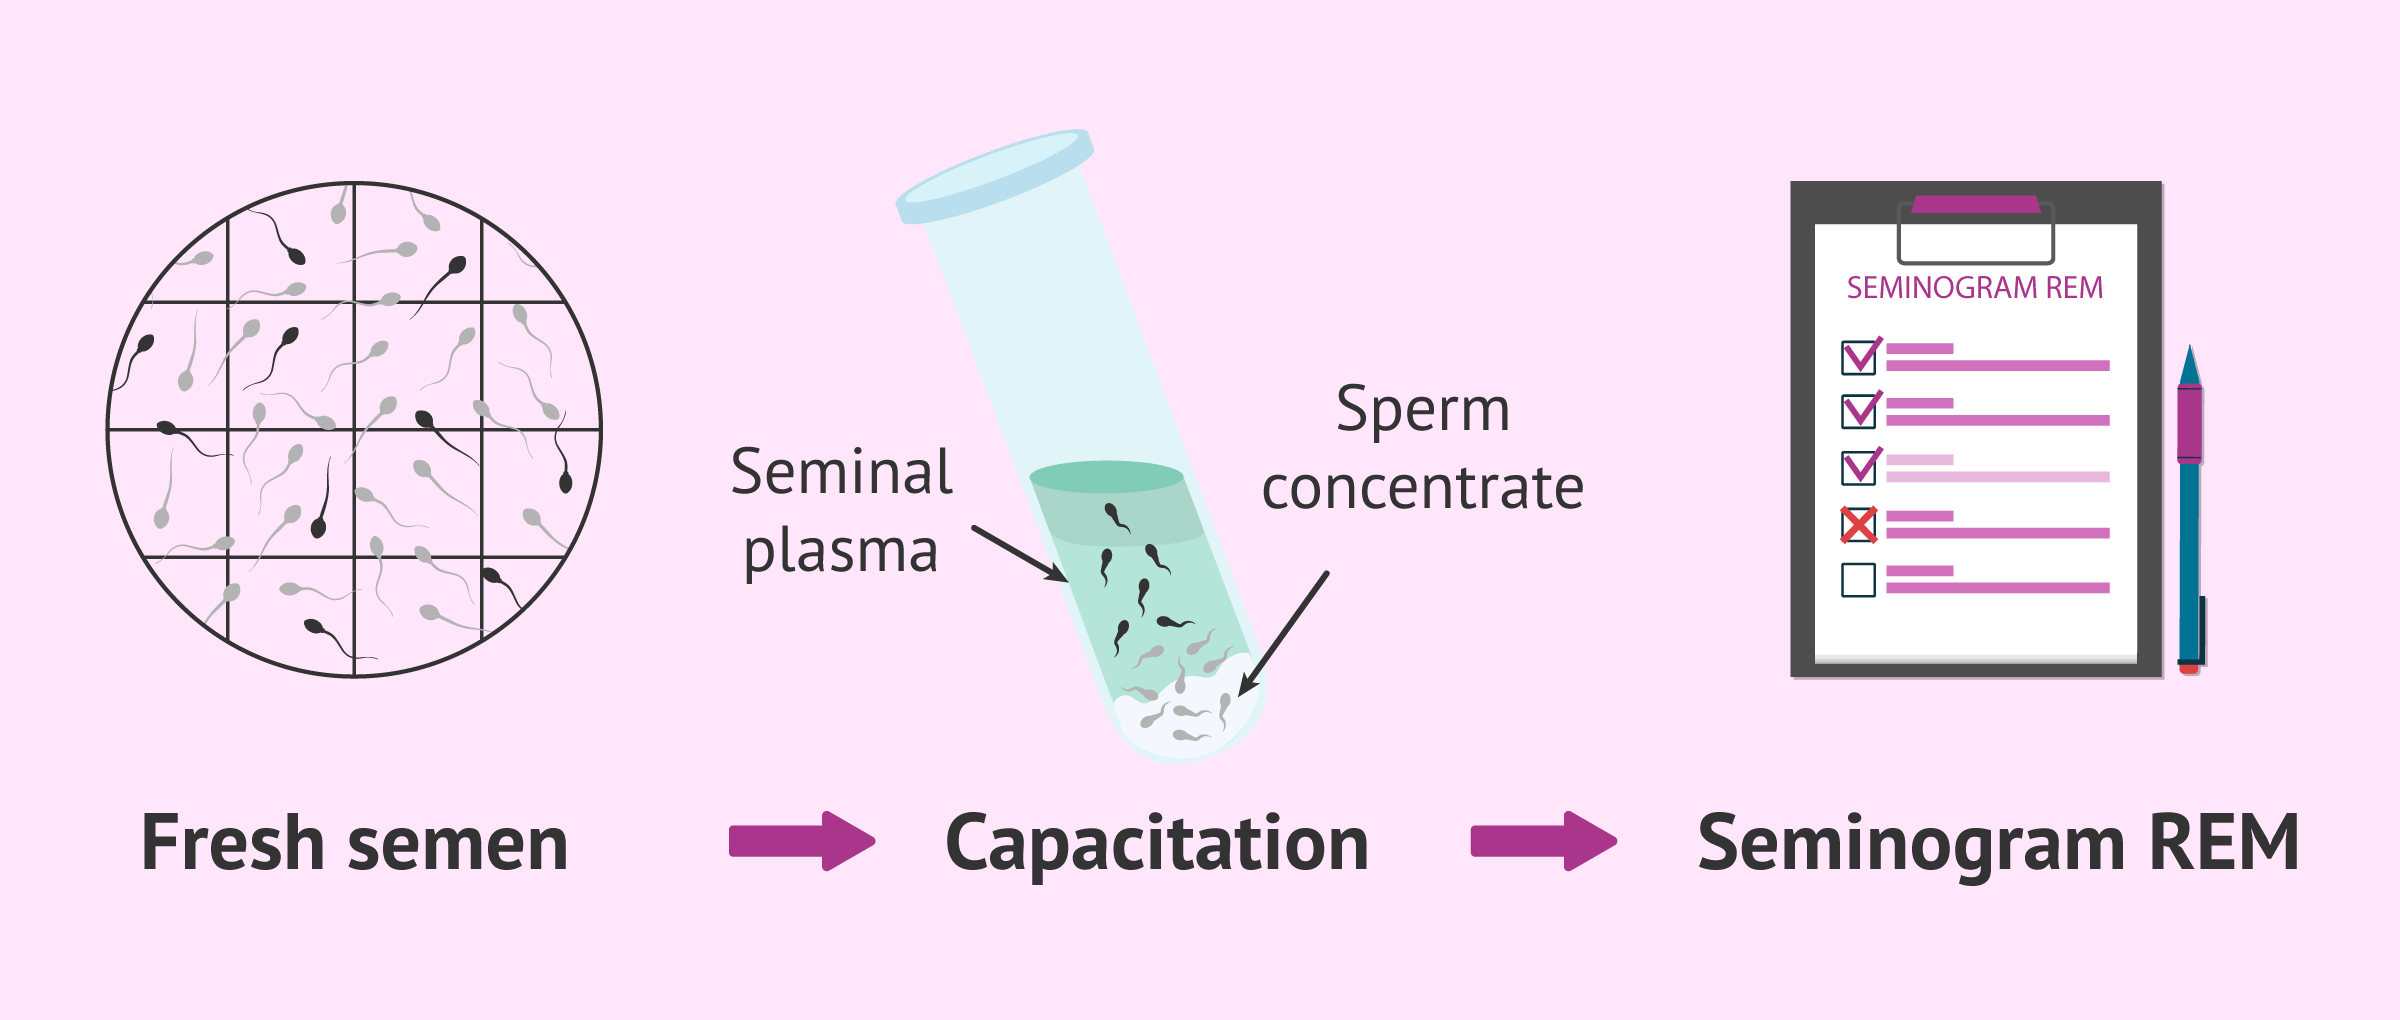 Sperm capacitation and MSC semen analysis